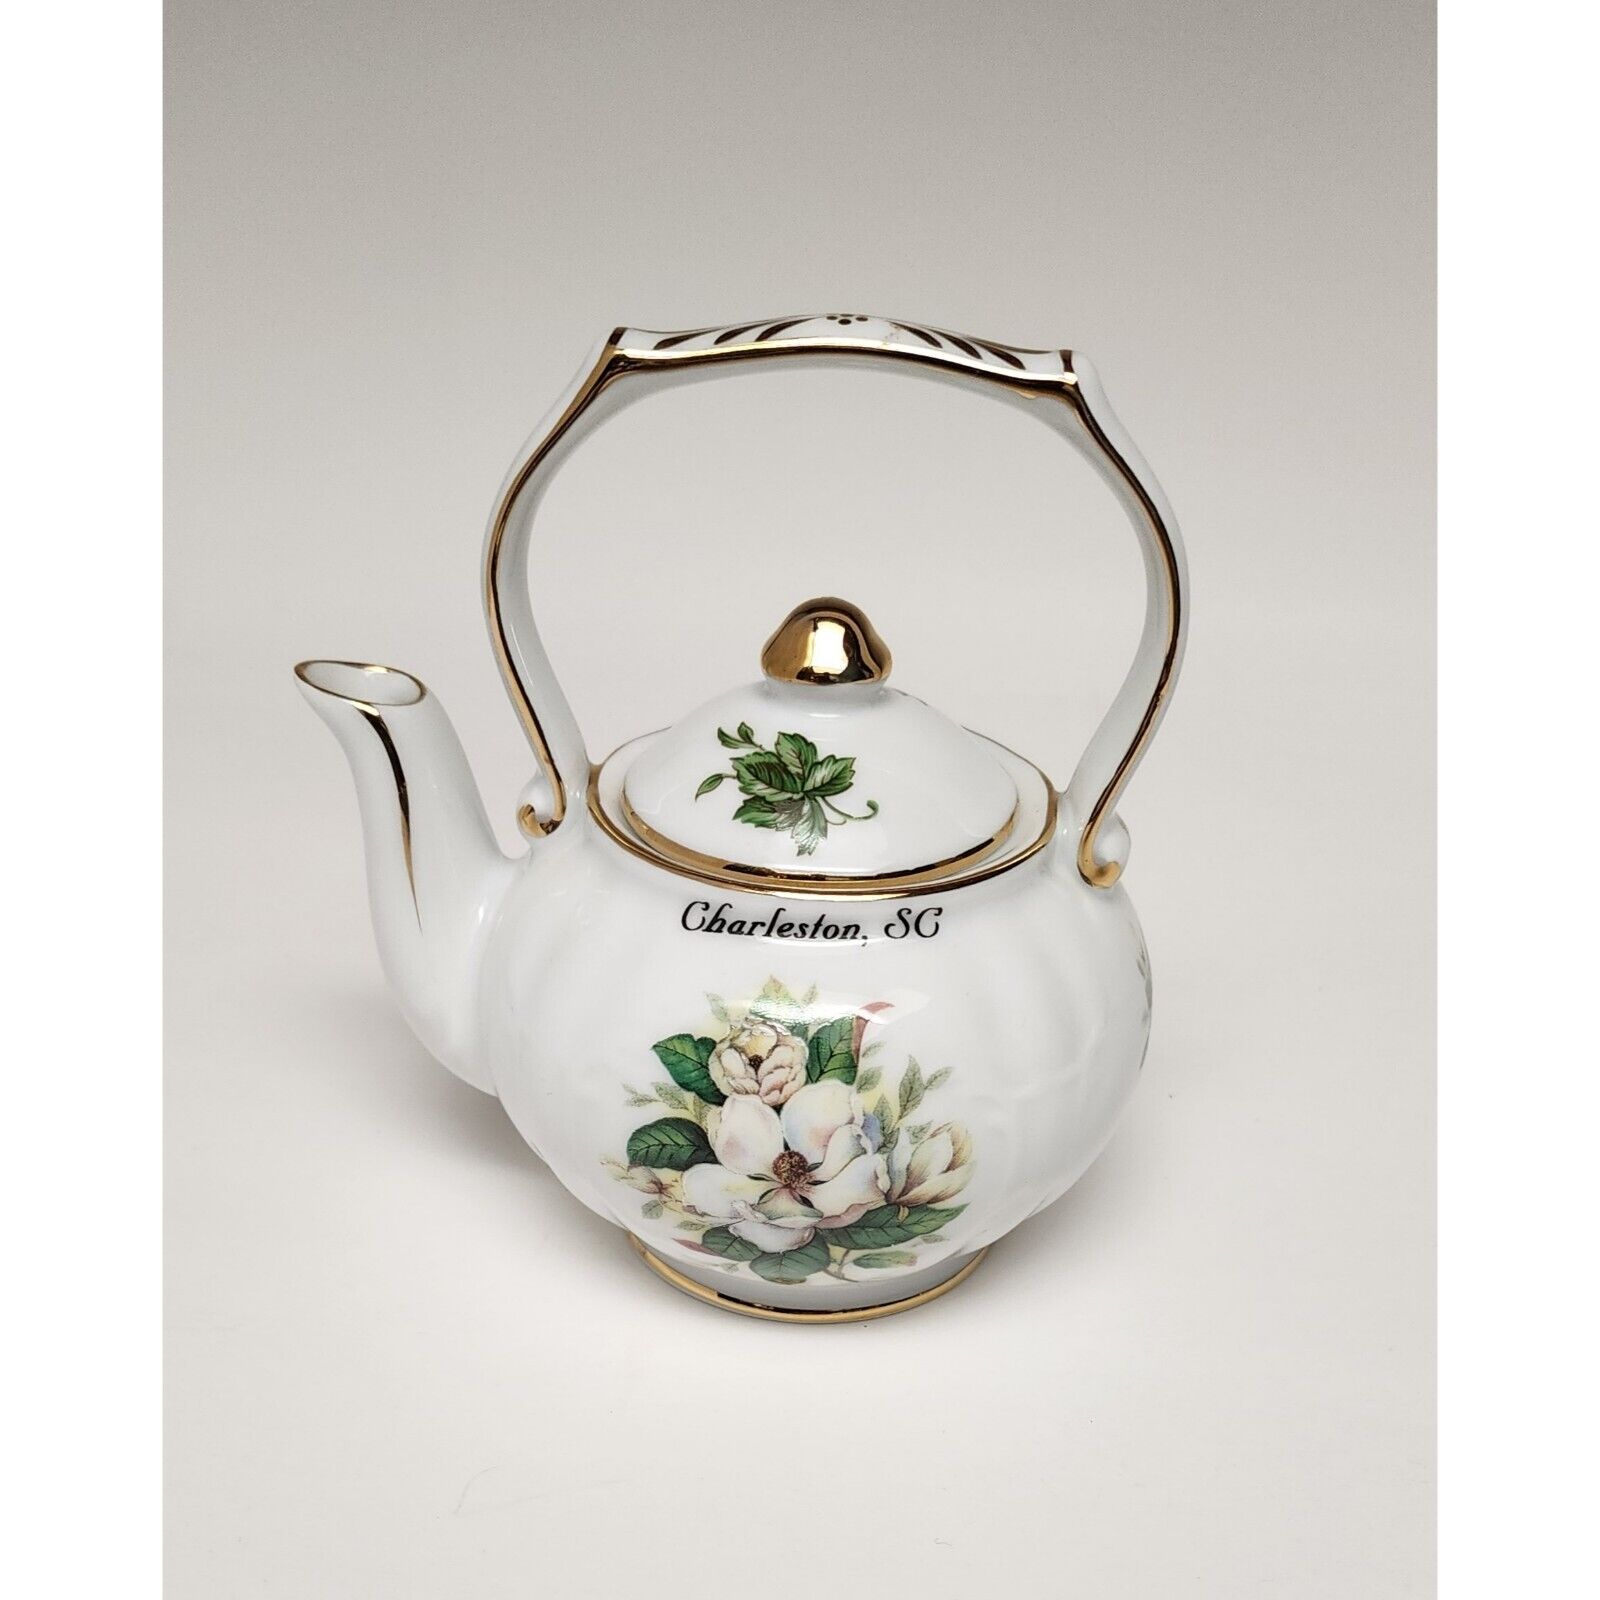  Fielder Keepsakes by LusterWare Charleston SC Mini Teapot  Teapot Fixed Handle